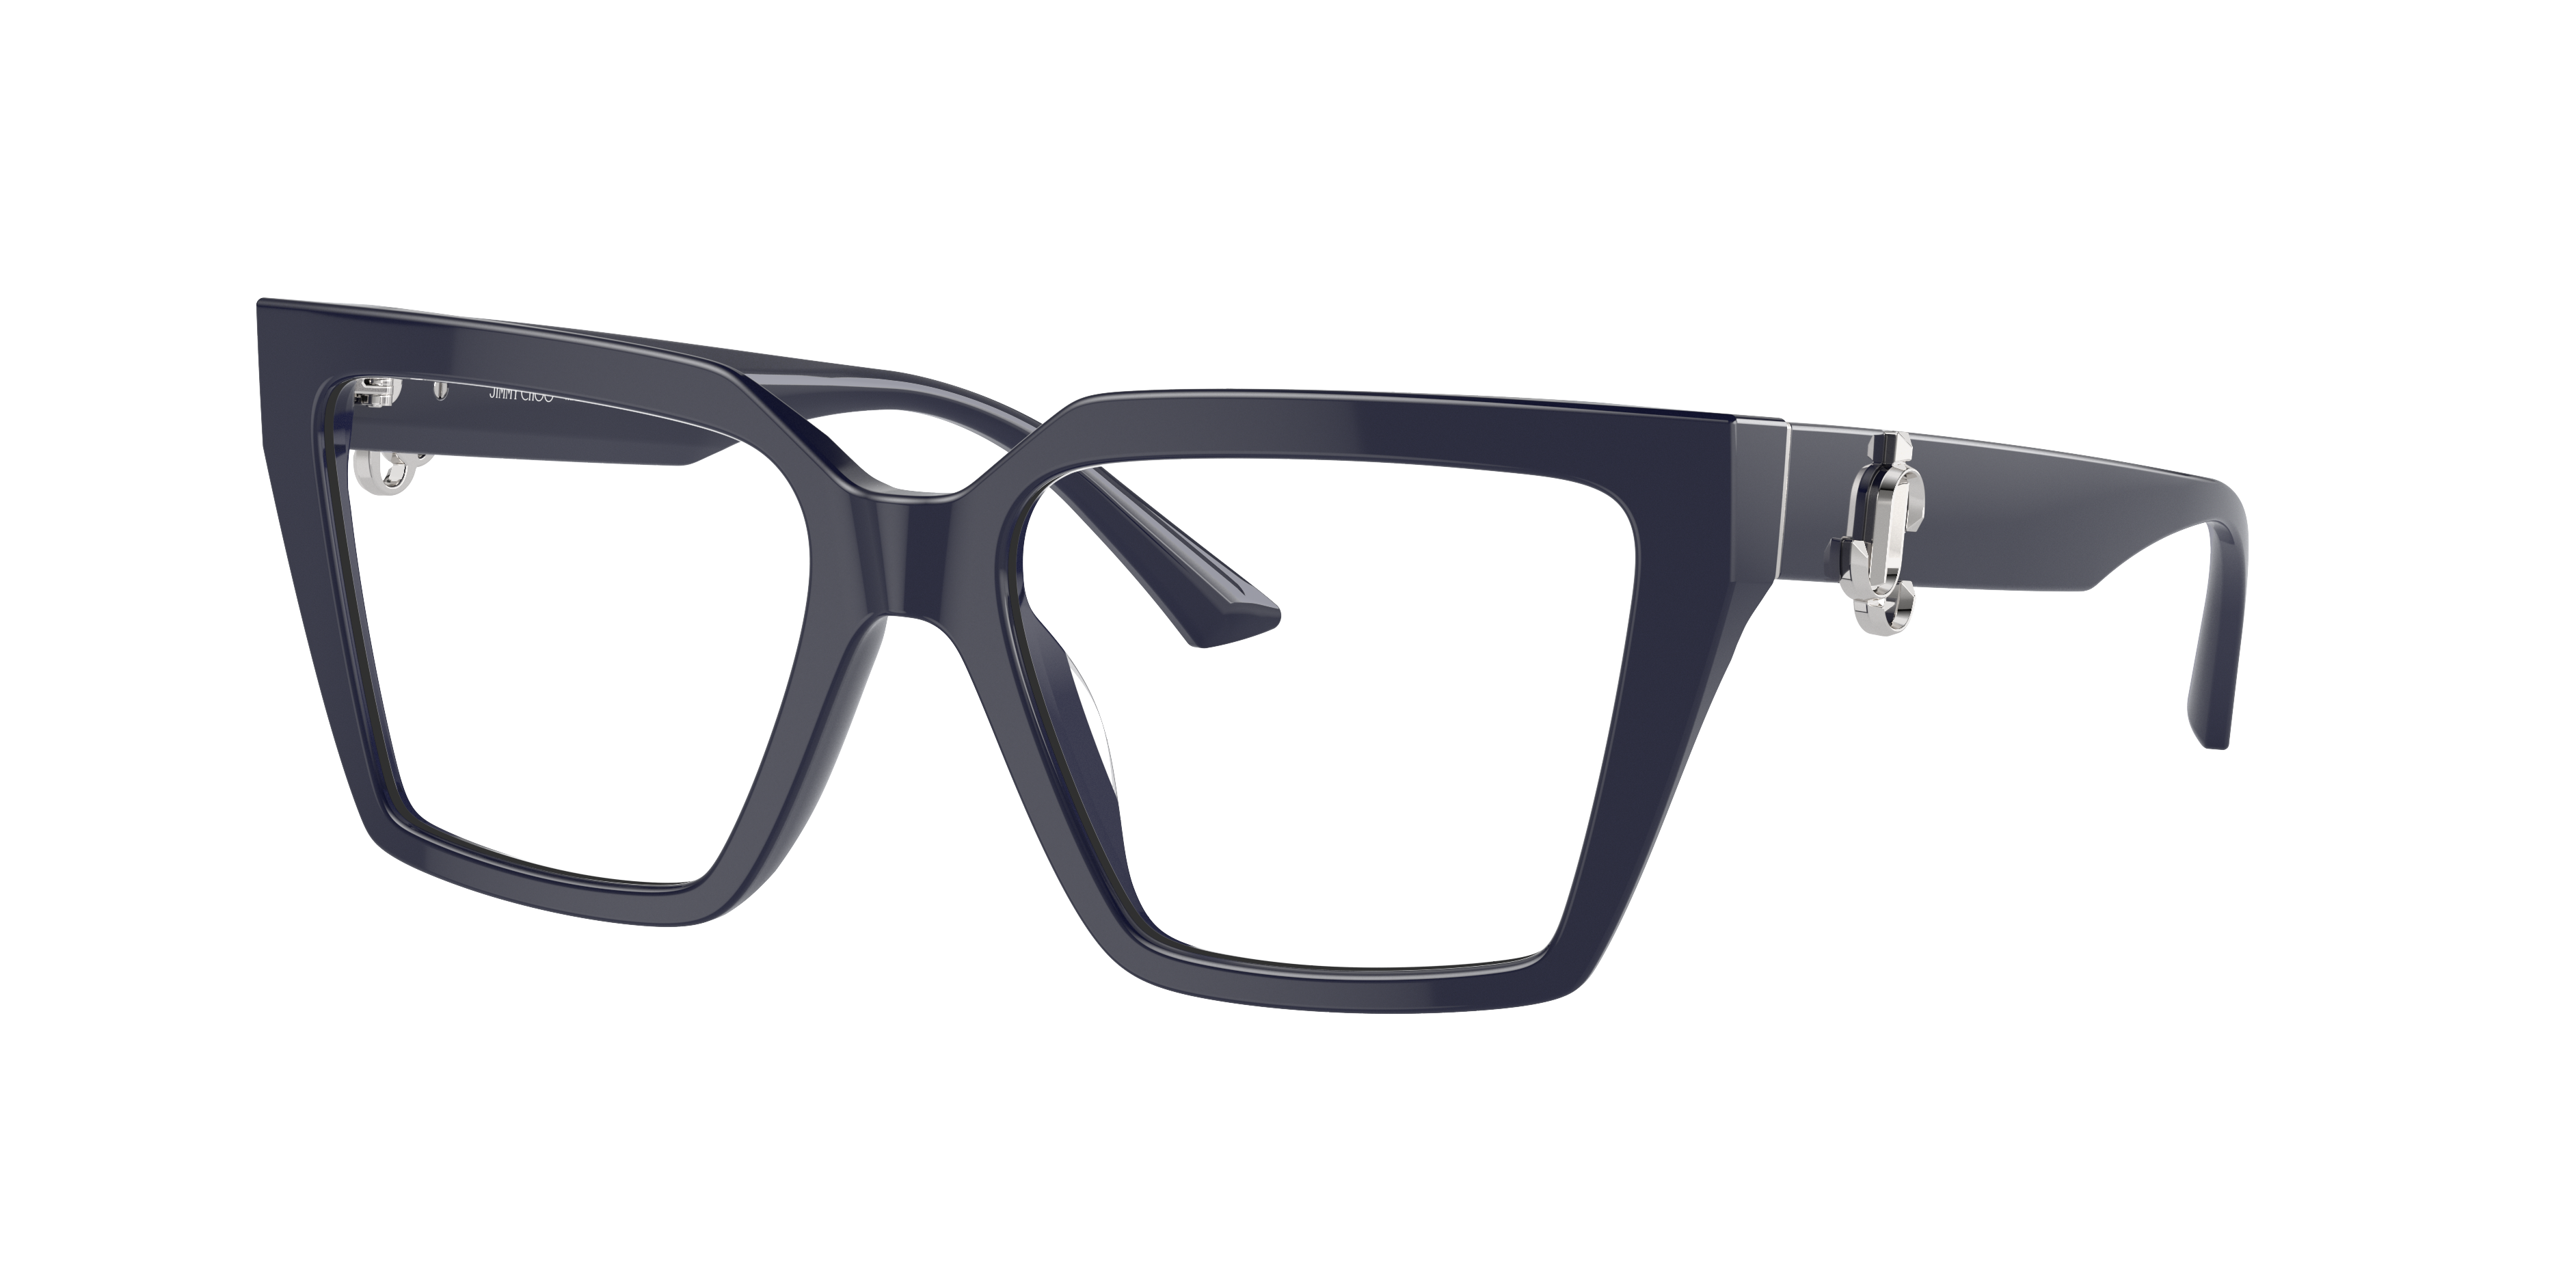 Jimmy Choo JC3008 Eyeglasses | LensCrafters